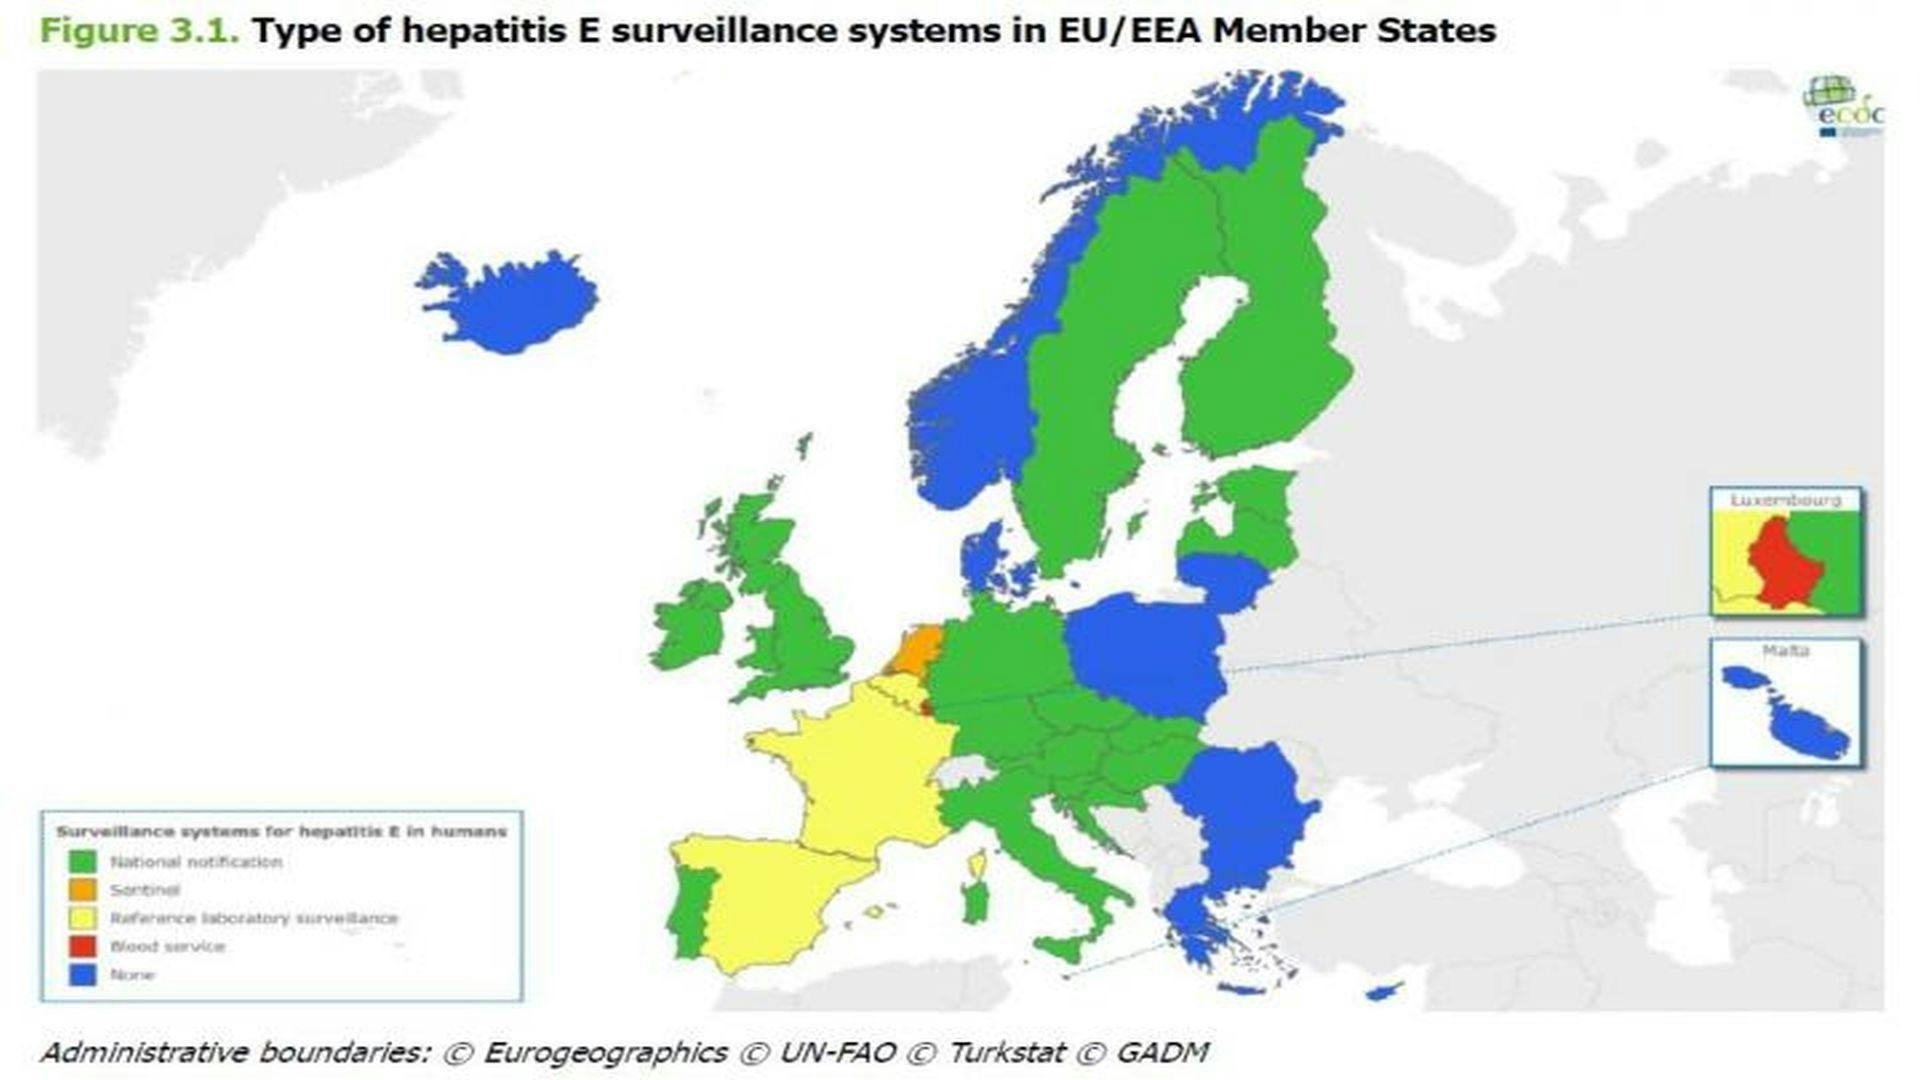 10-Fold Increase of Hepatitis E Cases in the EU in the Last Decade